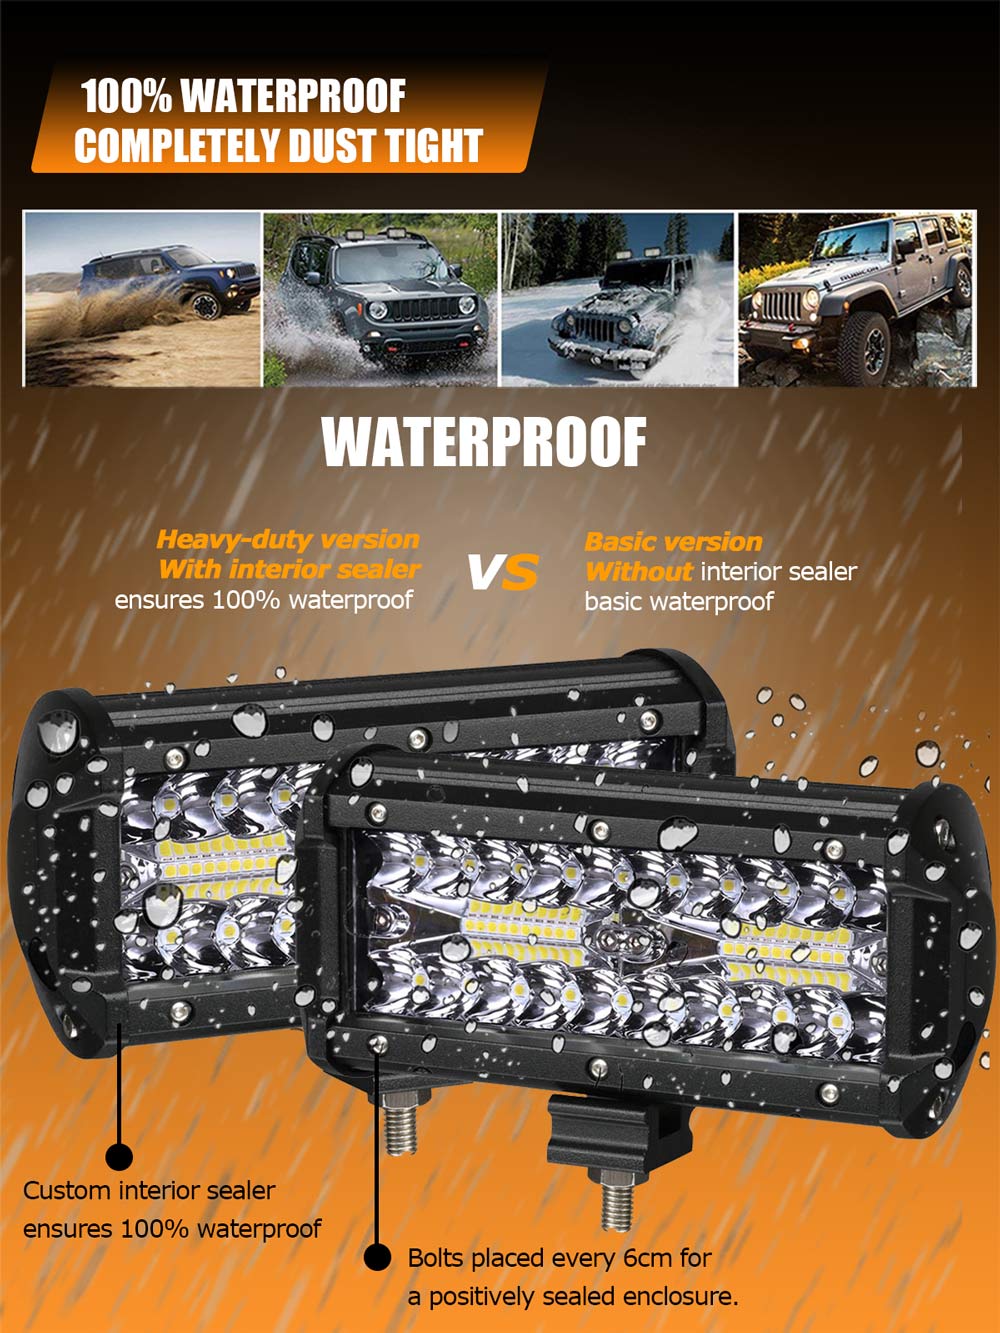 LED Bar 4 - 32 inch LED Light Bar LED Work Light for Car Tractor Boat OffRoad Off Road 4WD 4x4 Truck SUV ATV Driving 12V 24V